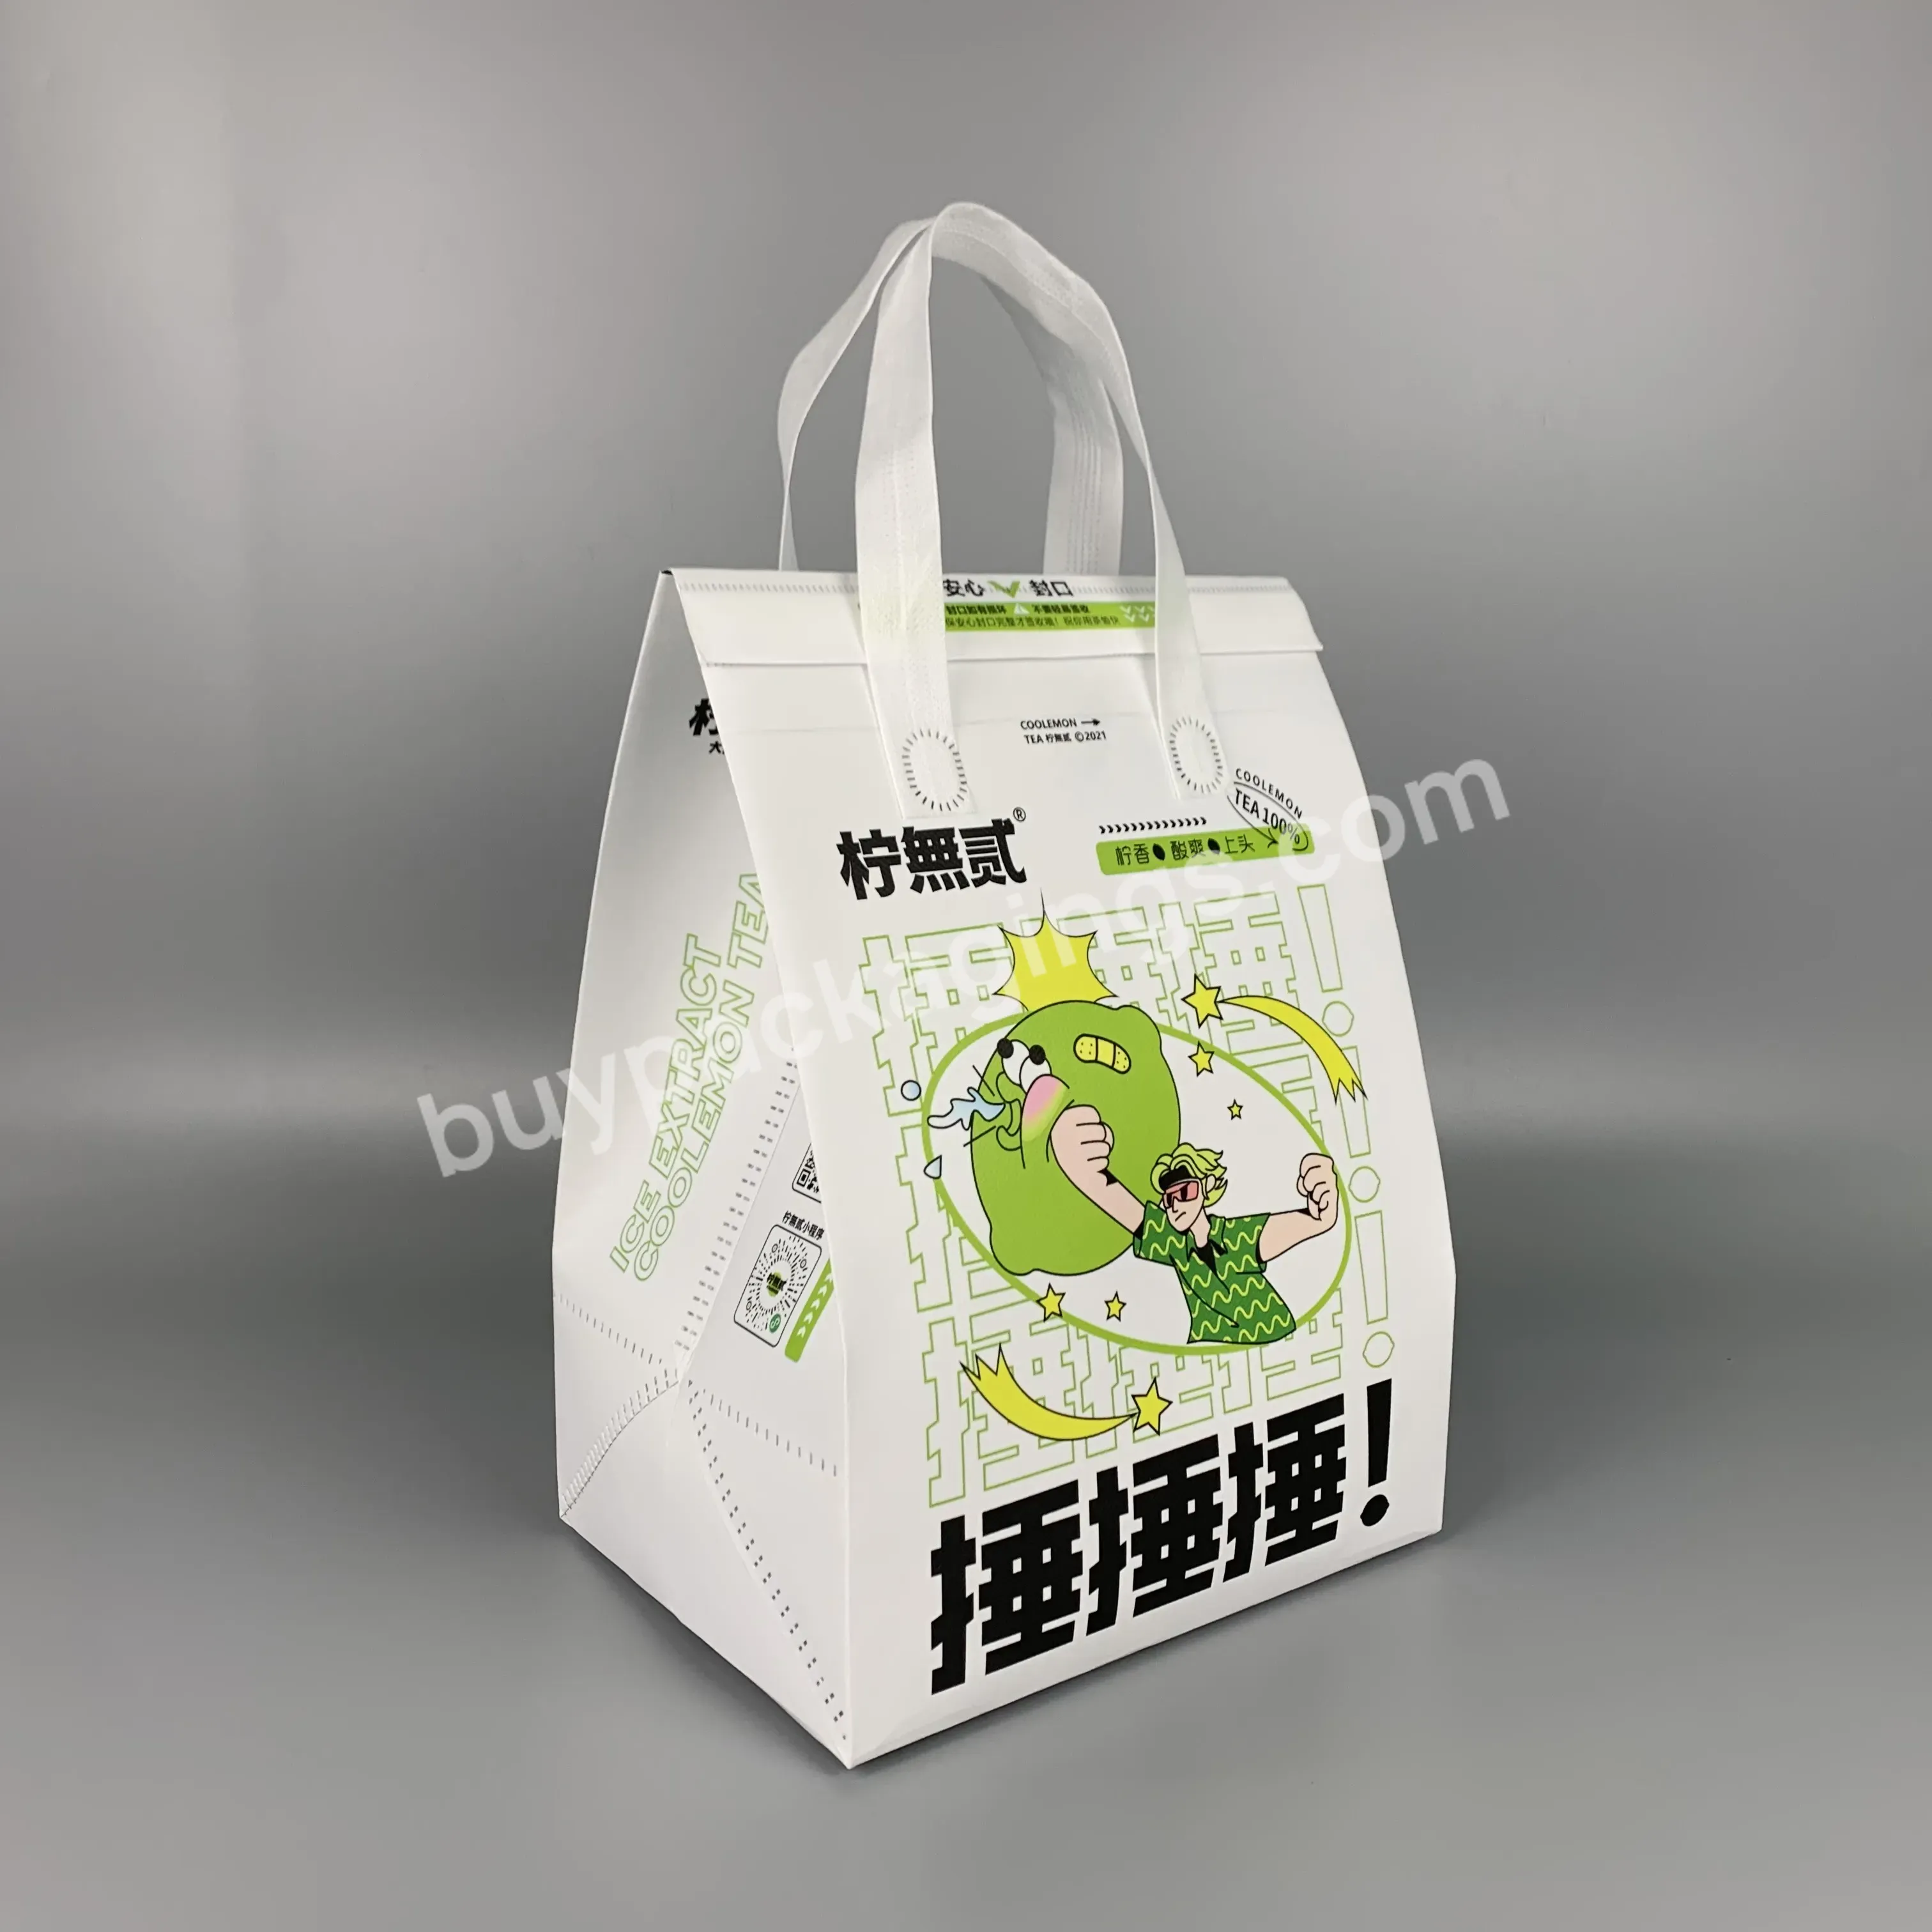 Whole Sale Durable Reusable Ecological Biodegradable Portable Shopping Bag Non Woven Cooler Bag - Buy Whole Sale Durable Reusable Cooler Bag,Ecological Biodegradable Non Woven Bag,Portable Non Woven Bag For Packing.